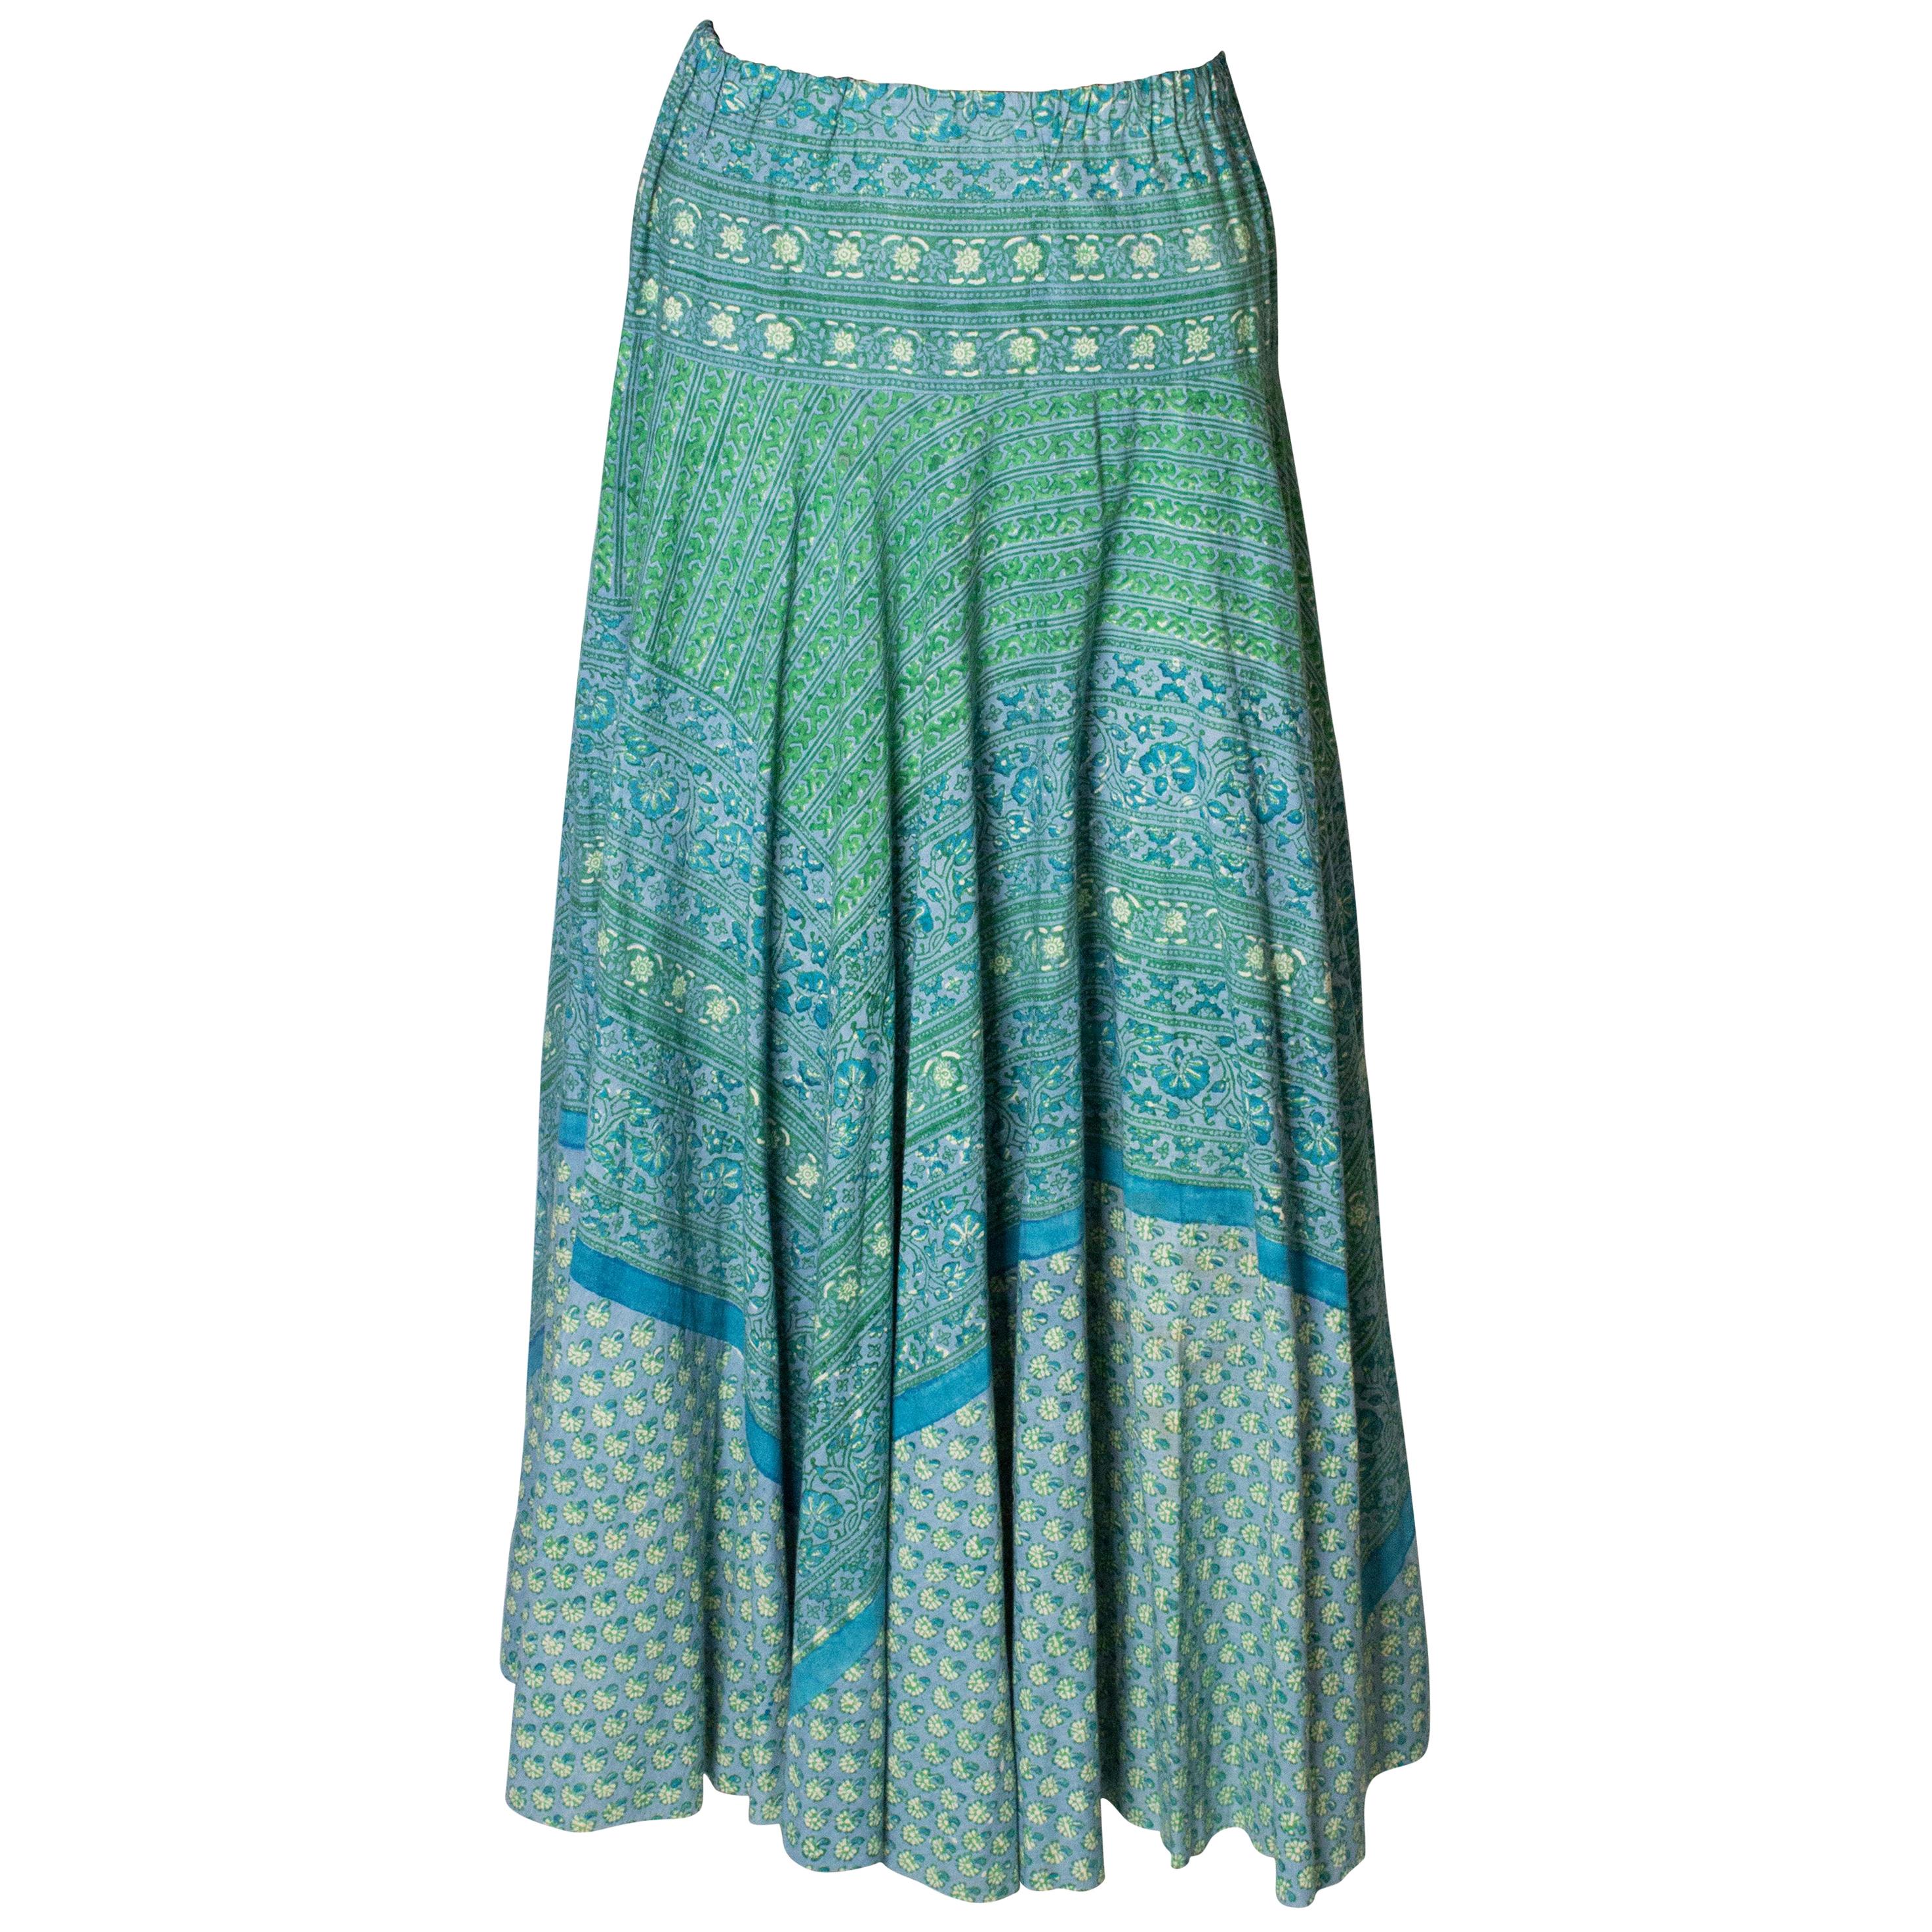 A Vintage 1970s Floral Printed Cotton Boho Summer  Skirt For Sale